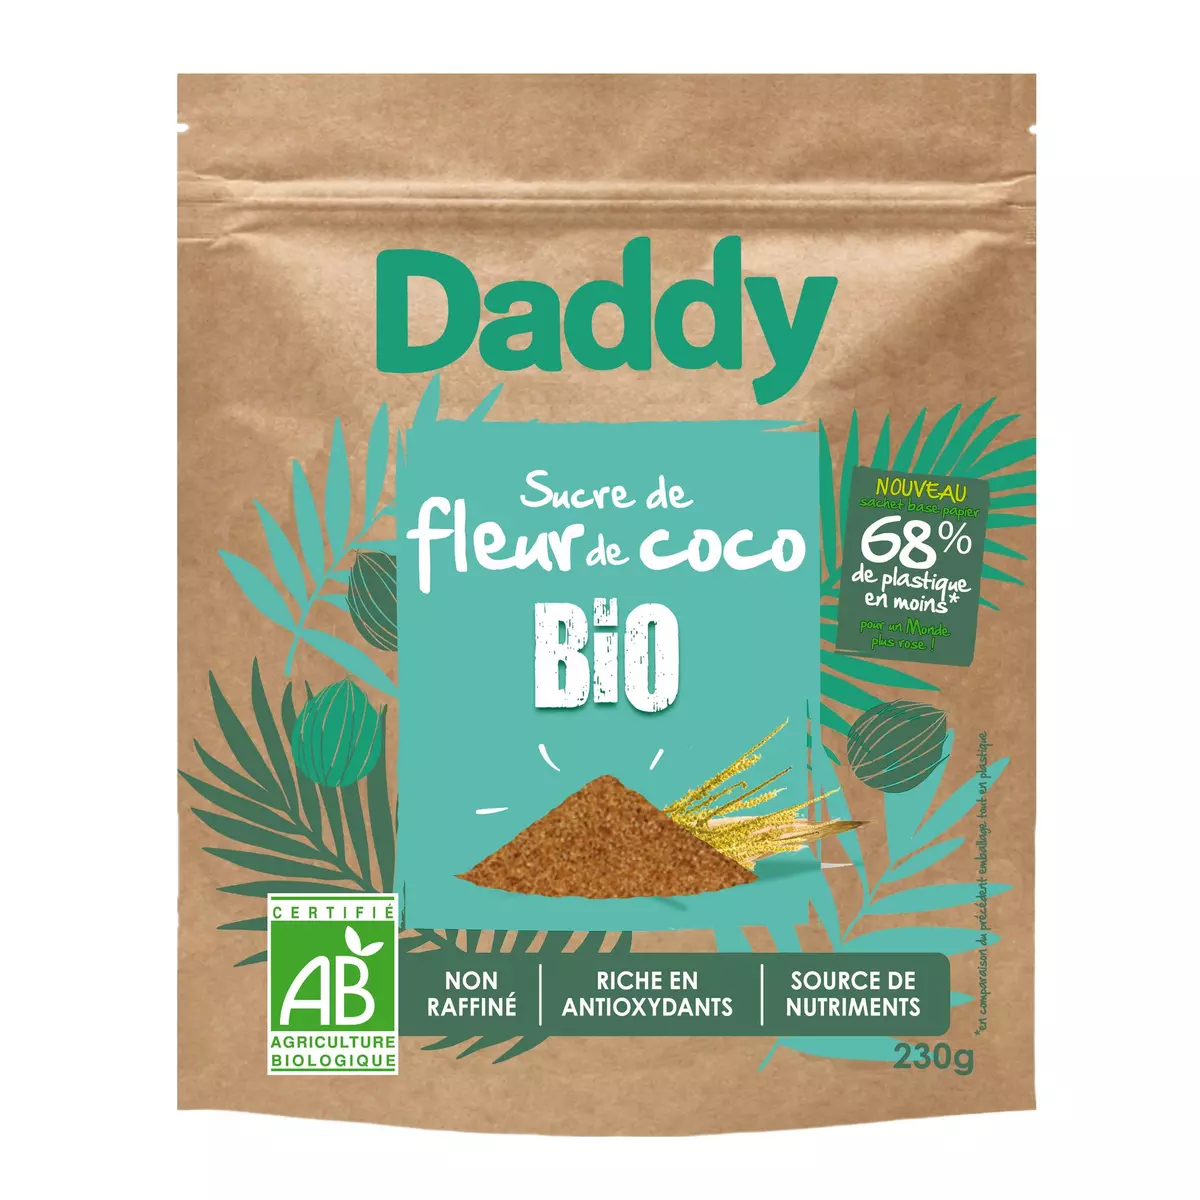 DADDY Sucre de fleur de coco bio en poudre 230g